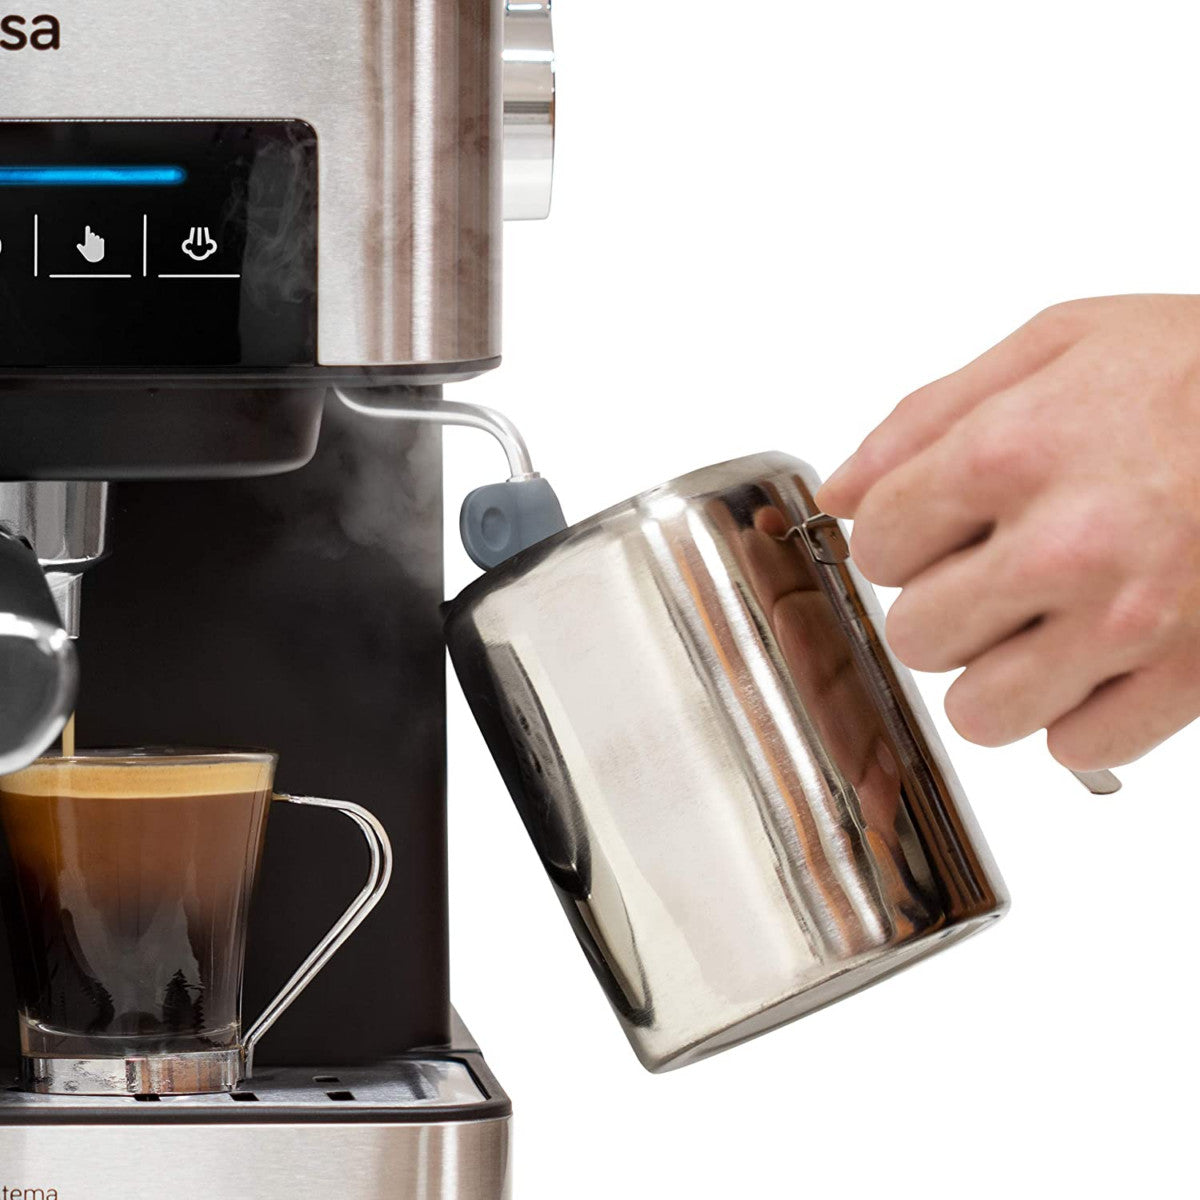 UFESA CE7255 Expresso Coffee Maker 850W Inox